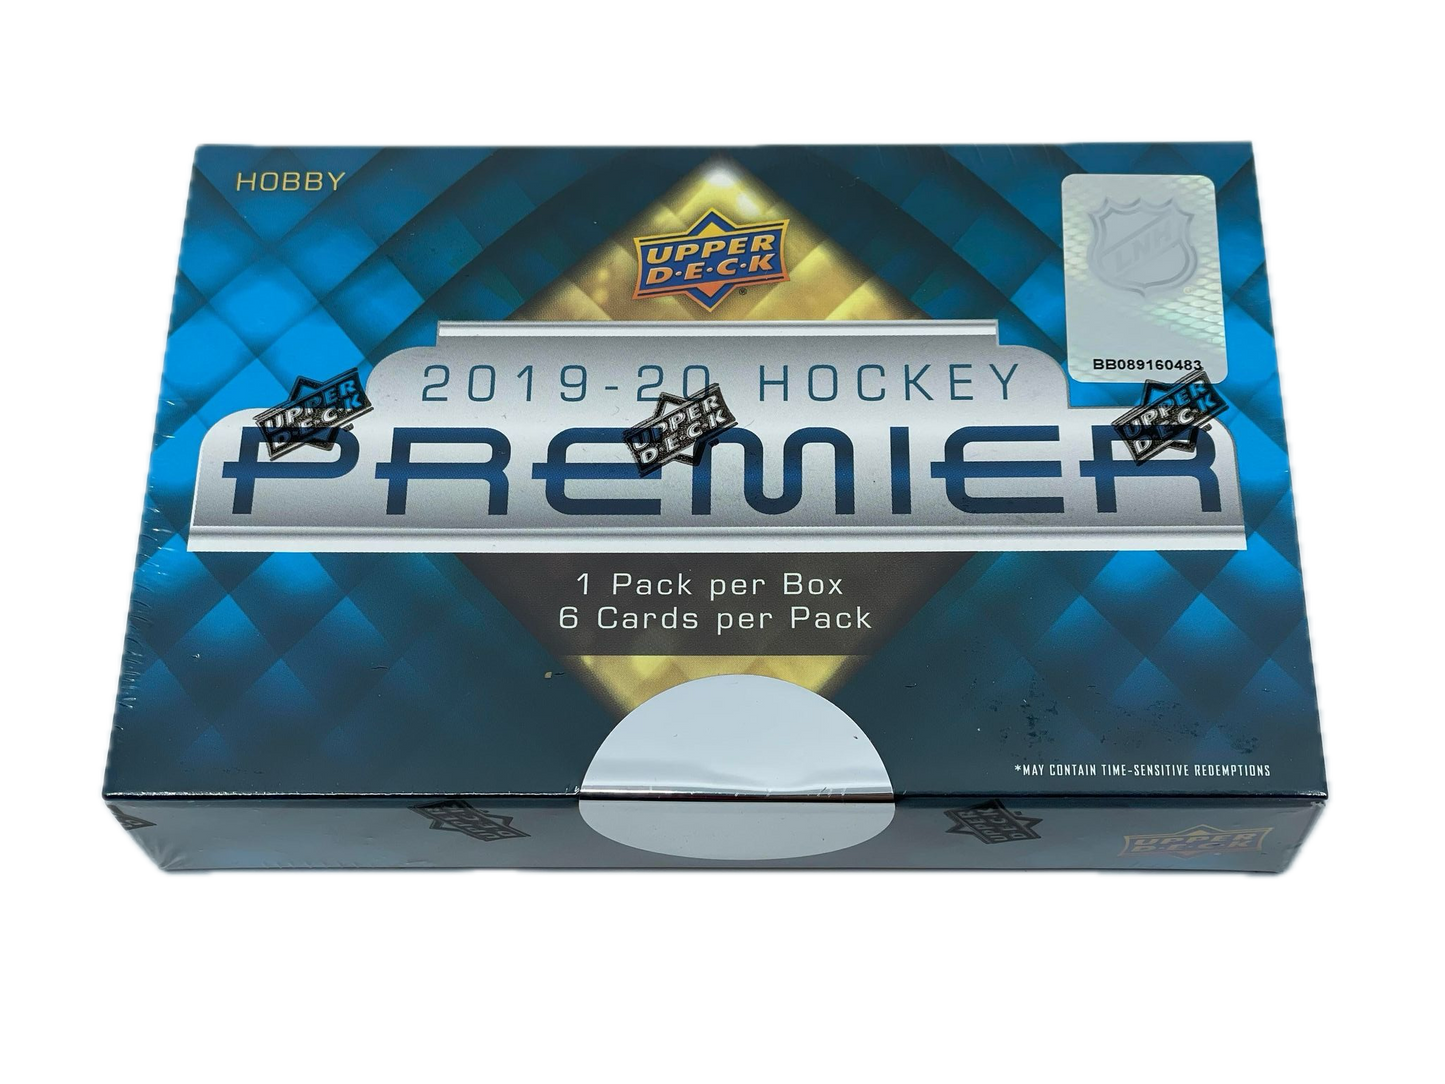 2019-20 Upper Deck Premier Hockey Hobby Box